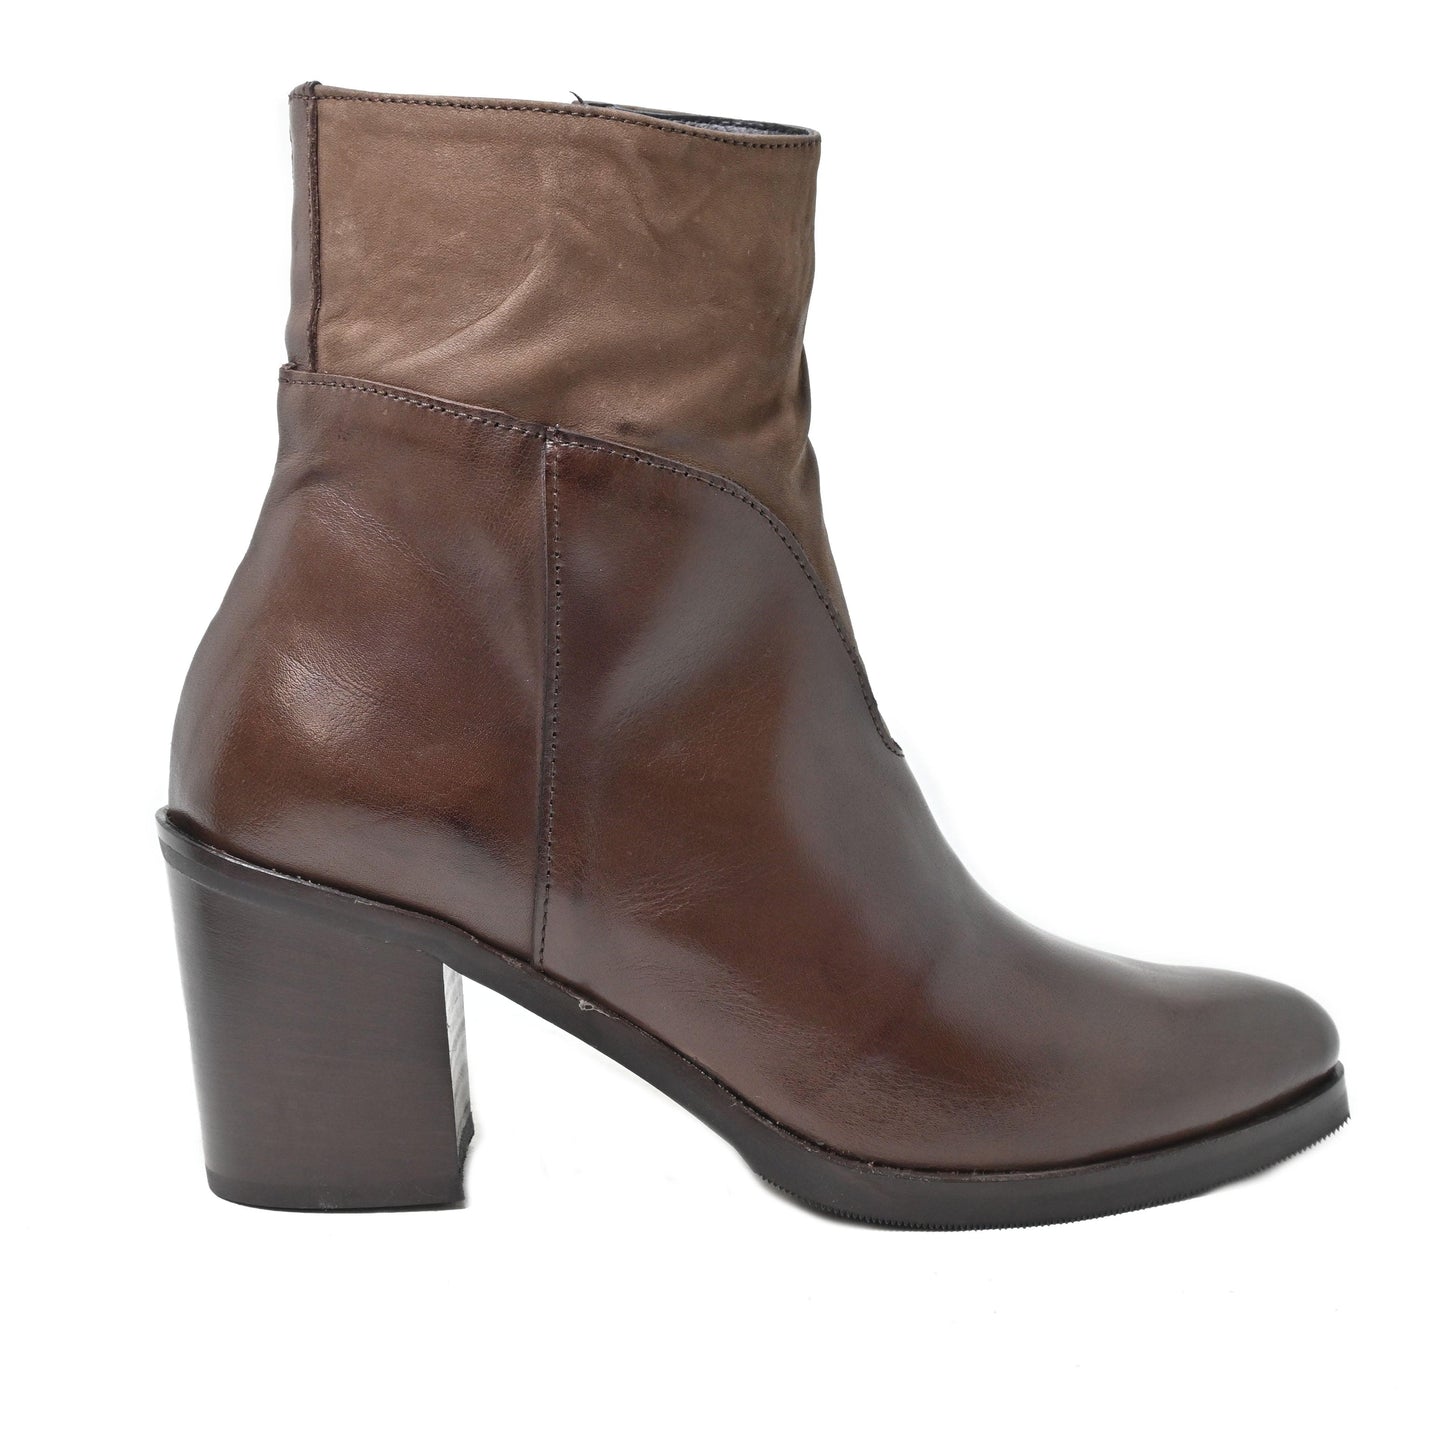 YARA 02 - ankle boot leather MOKA - History541